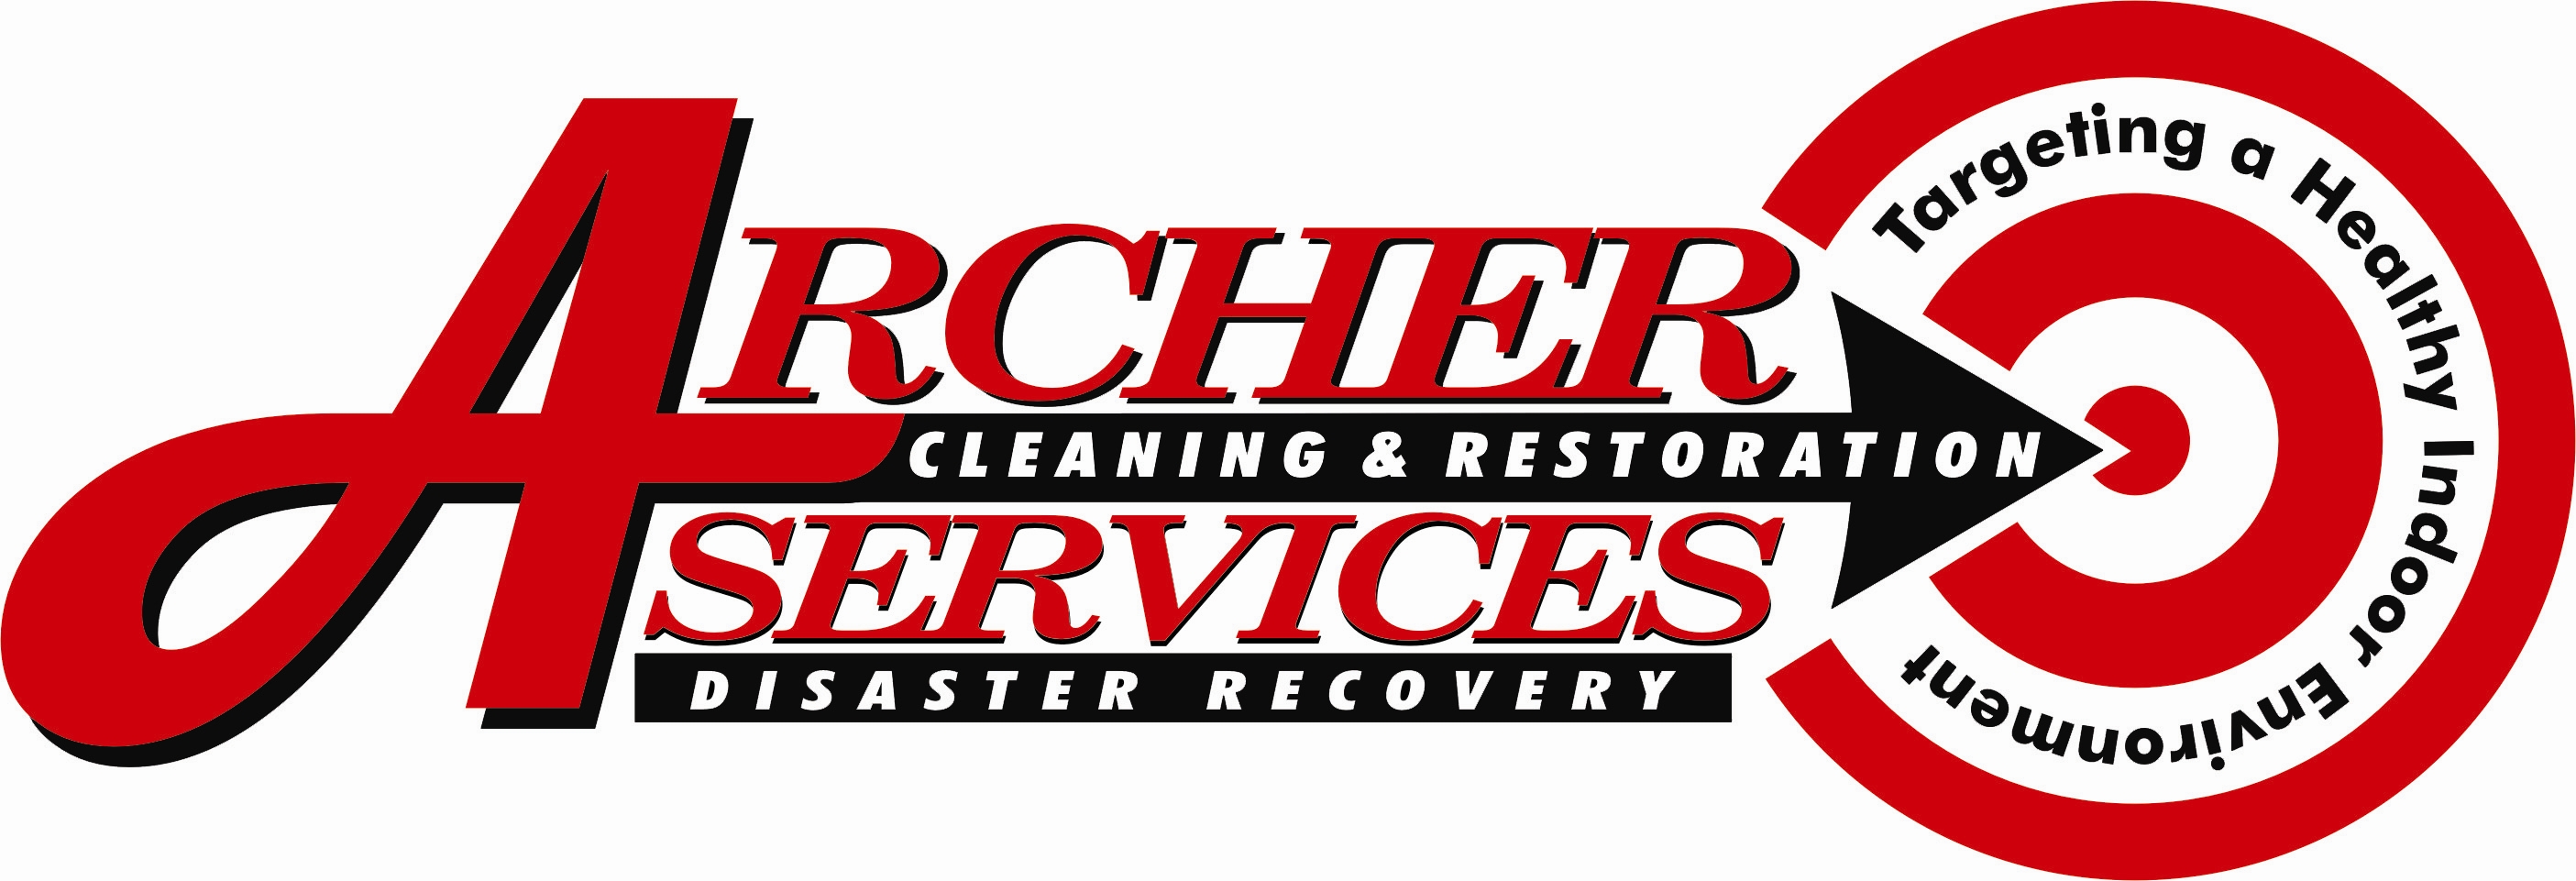 Archer Cleaning & Restoration Services Logo